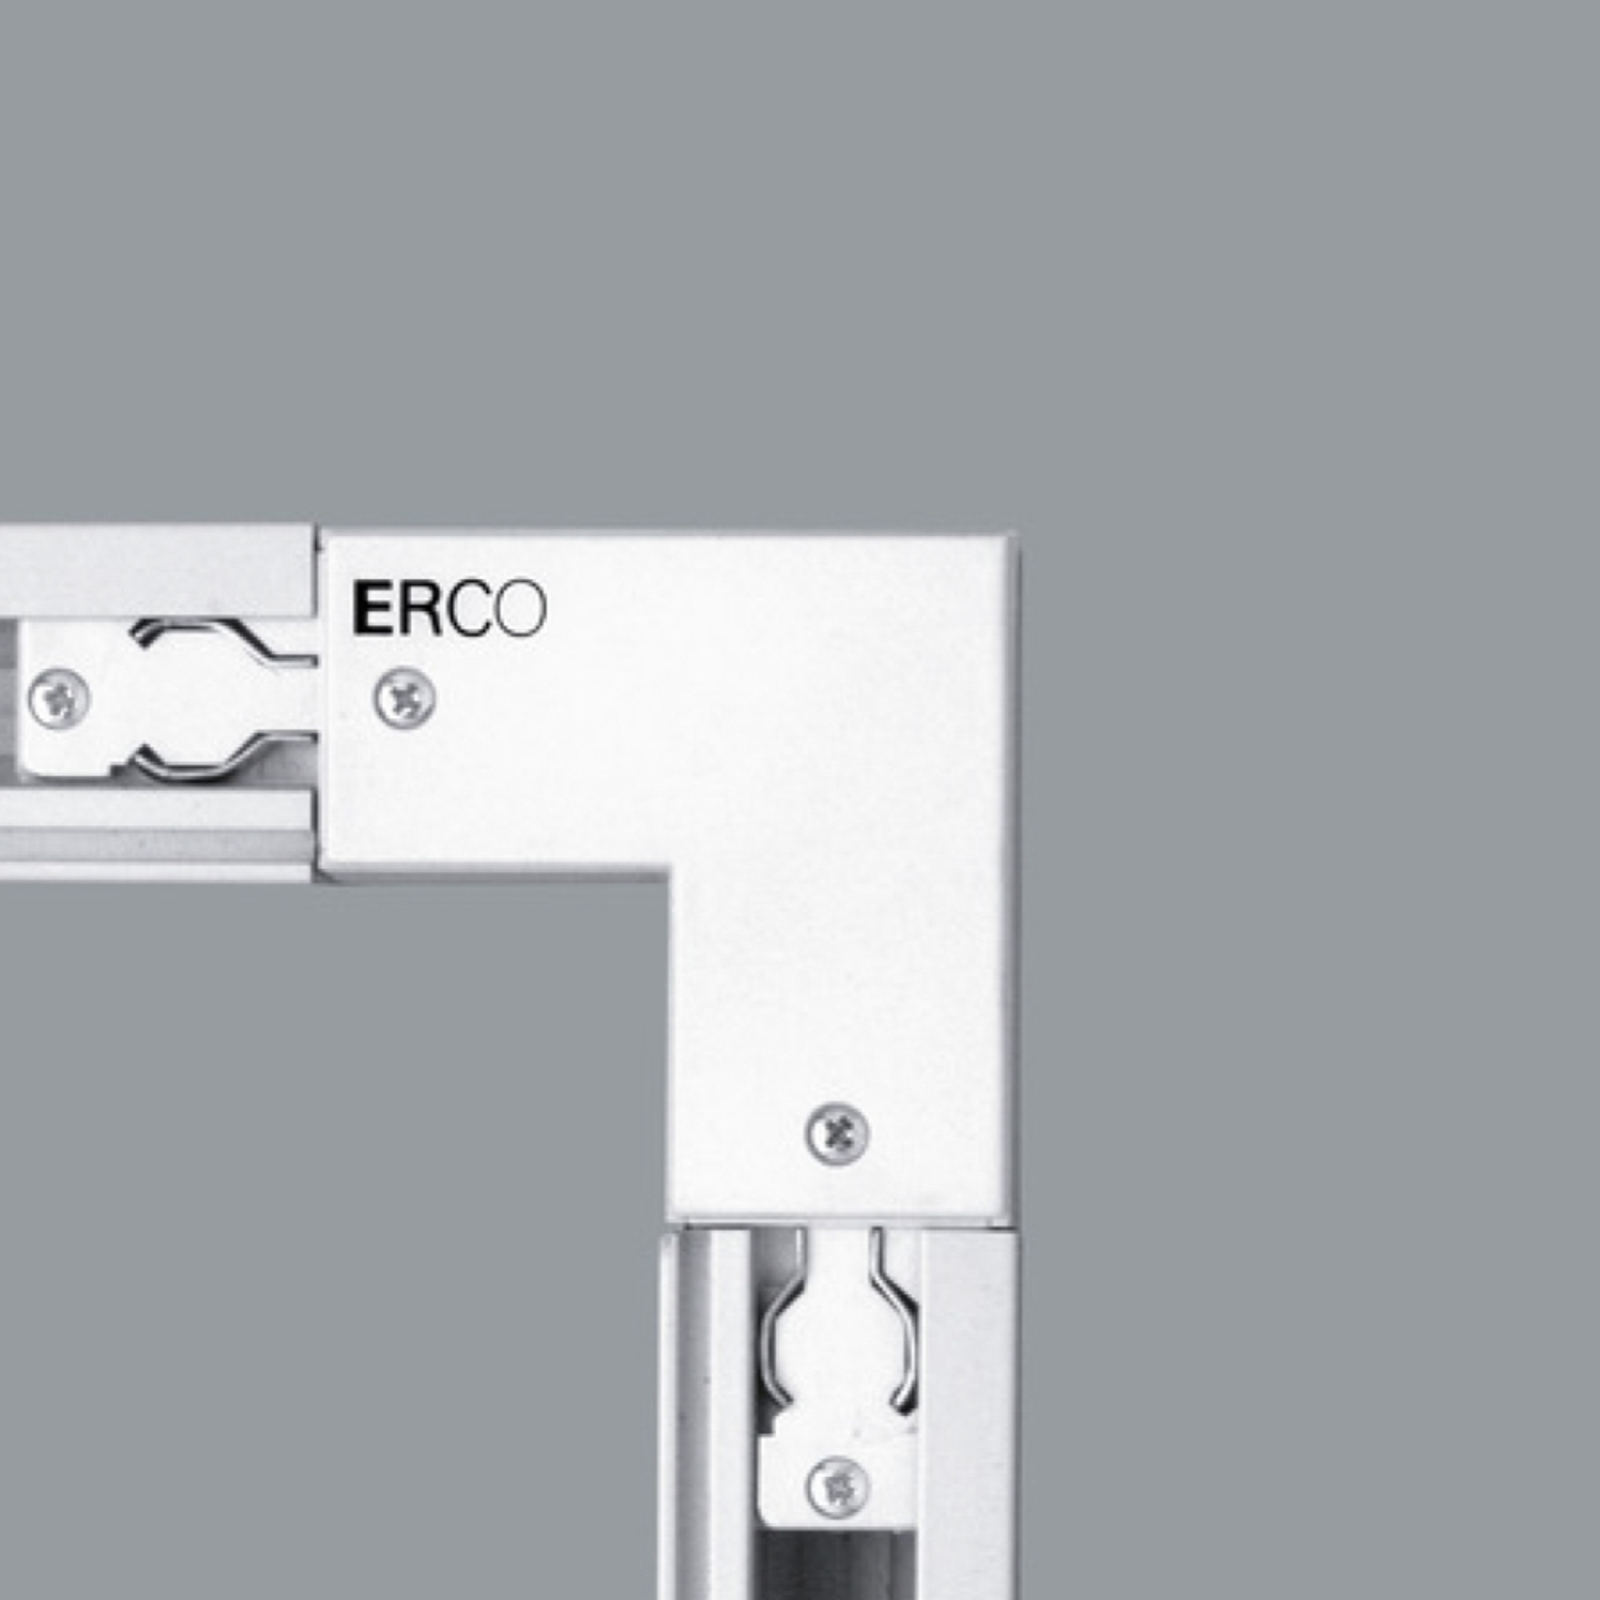 ERCO 3-faset hjørnekobling jord innvendig, hvit